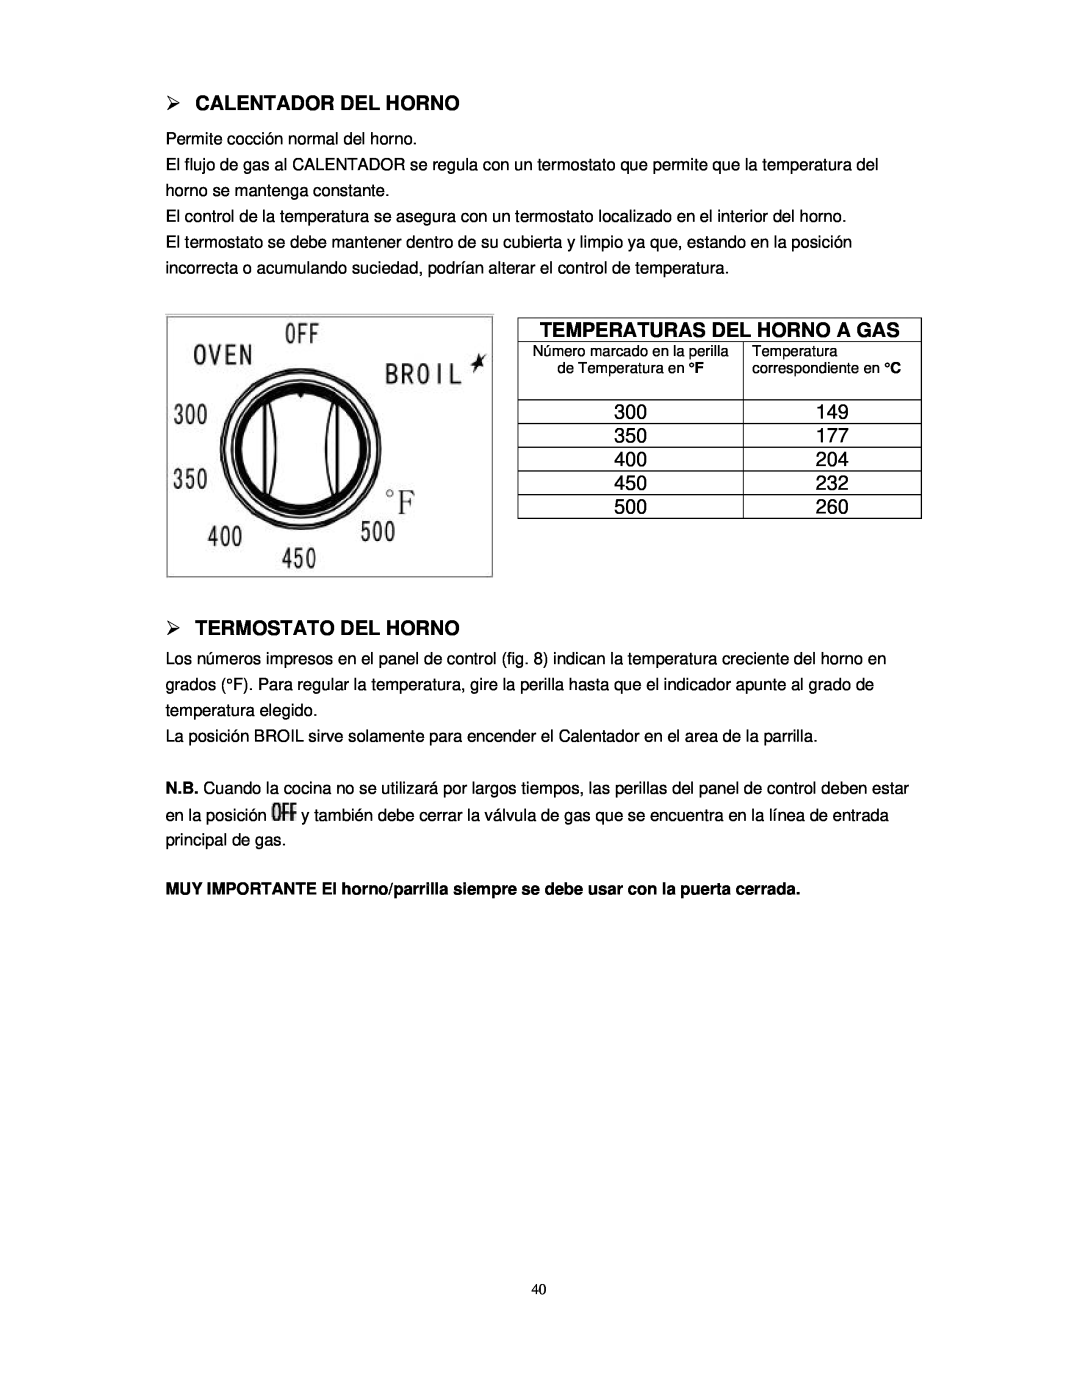 Avanti DG2451W, DG2450SS instruction manual  Calentador Del Horno, Temperaturas Del Horno A Gas,  Termostato Del Horno 